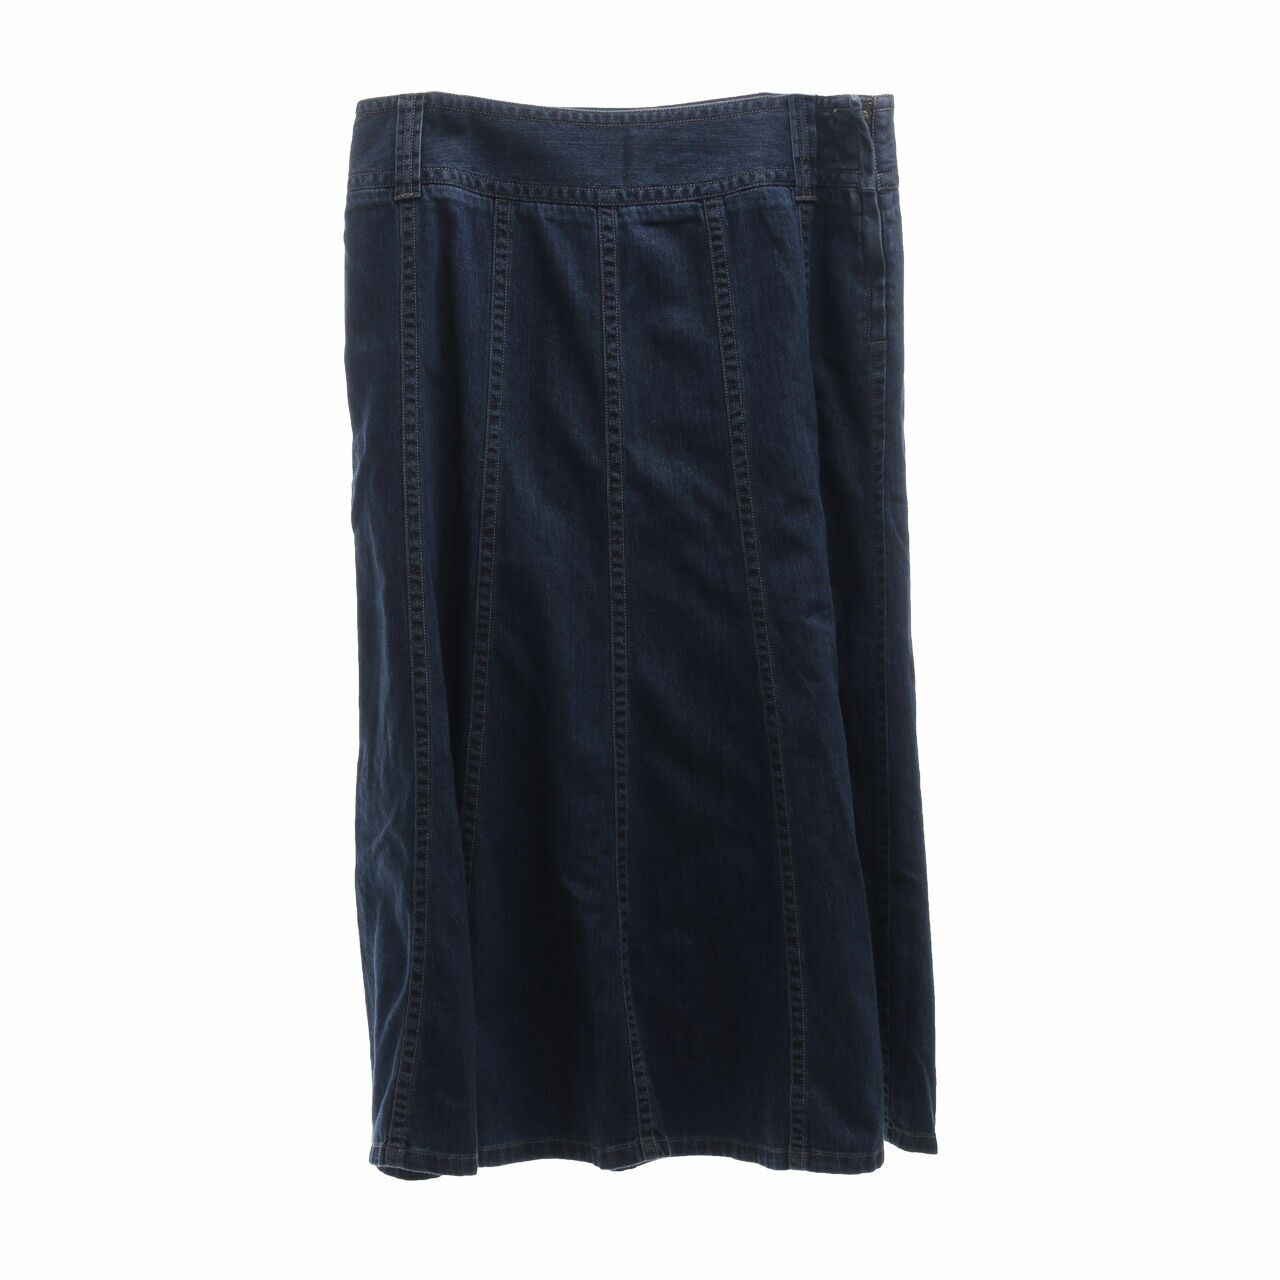 Liz Claiborne Dark Blue Washed Midi Skirt